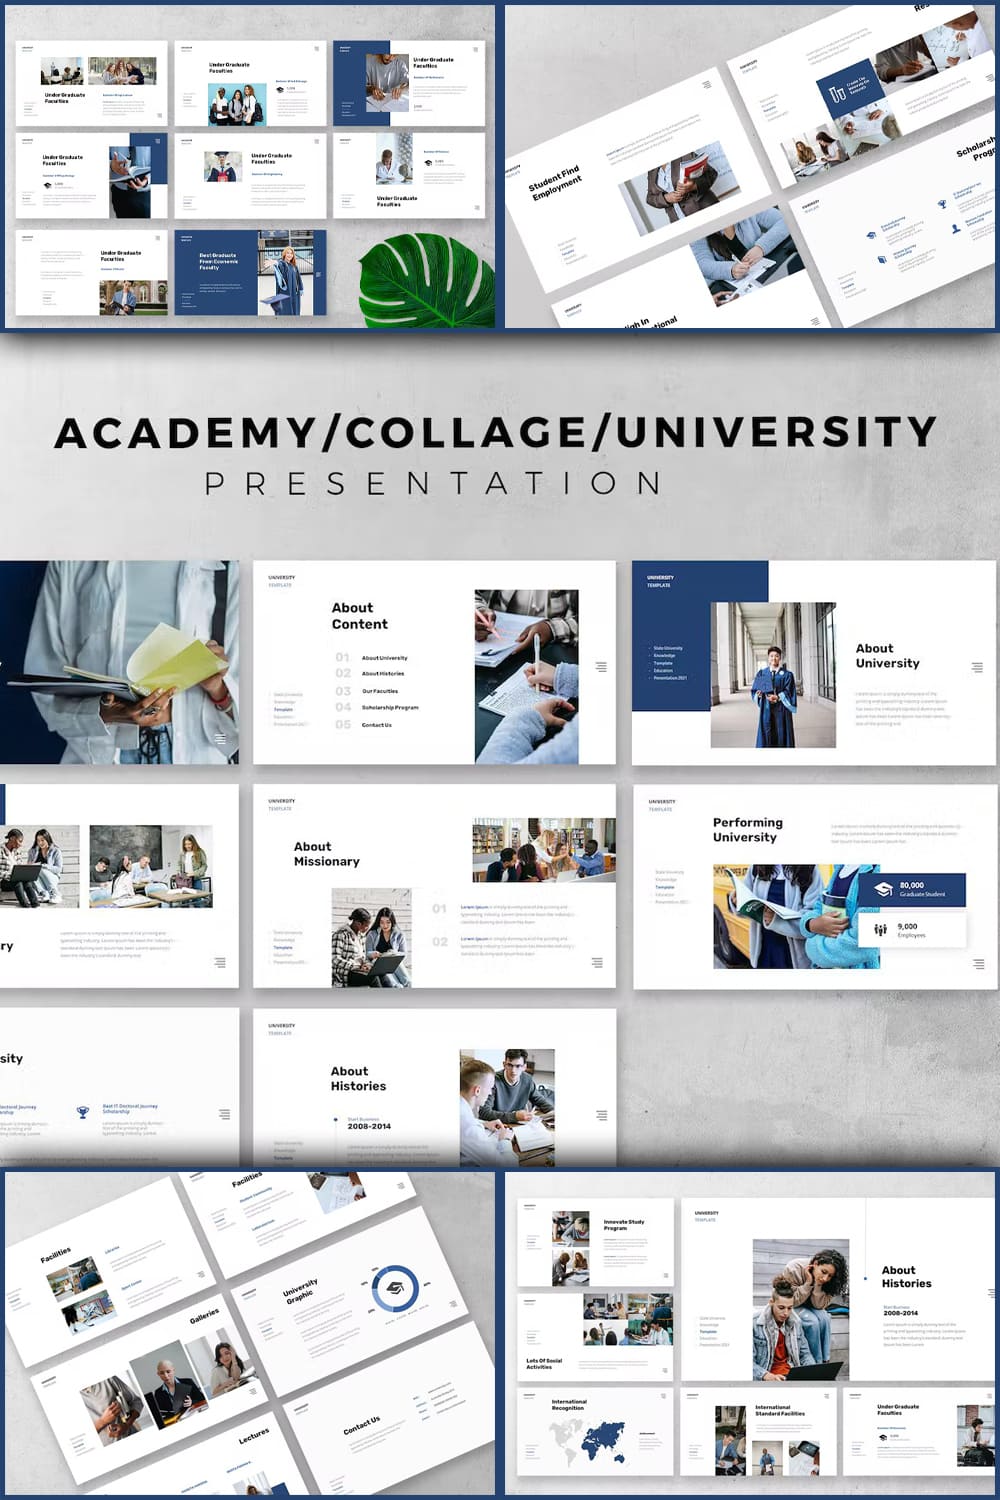 Education University Presentation Slide - pinterest image preview.